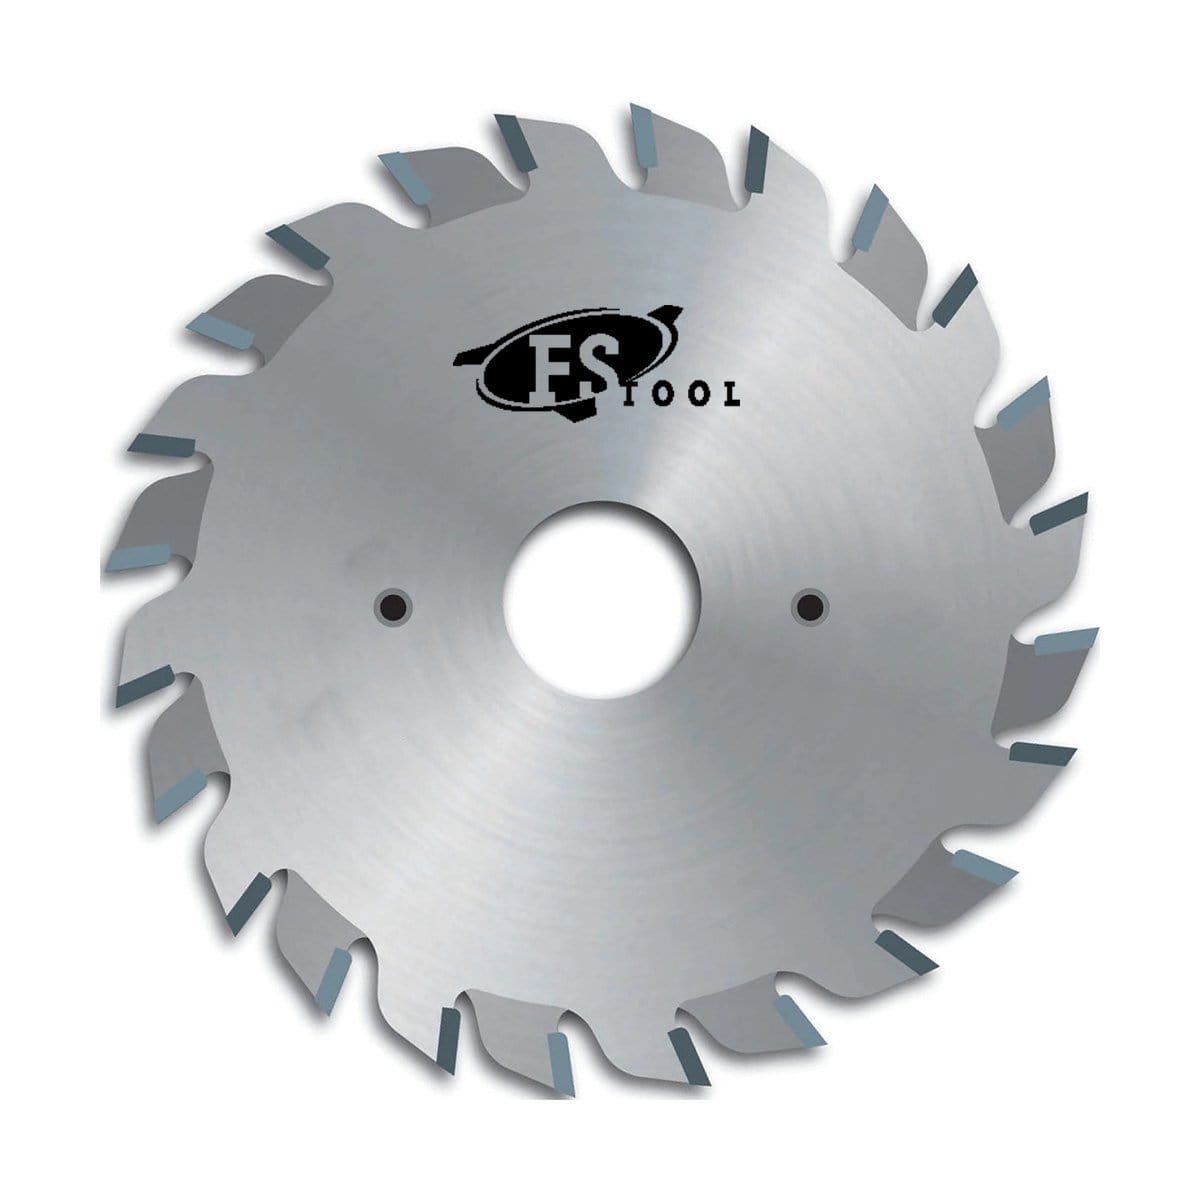 FS Tool 52812001-20 Saw Blade 120mm Industrial Split Scoring Blade